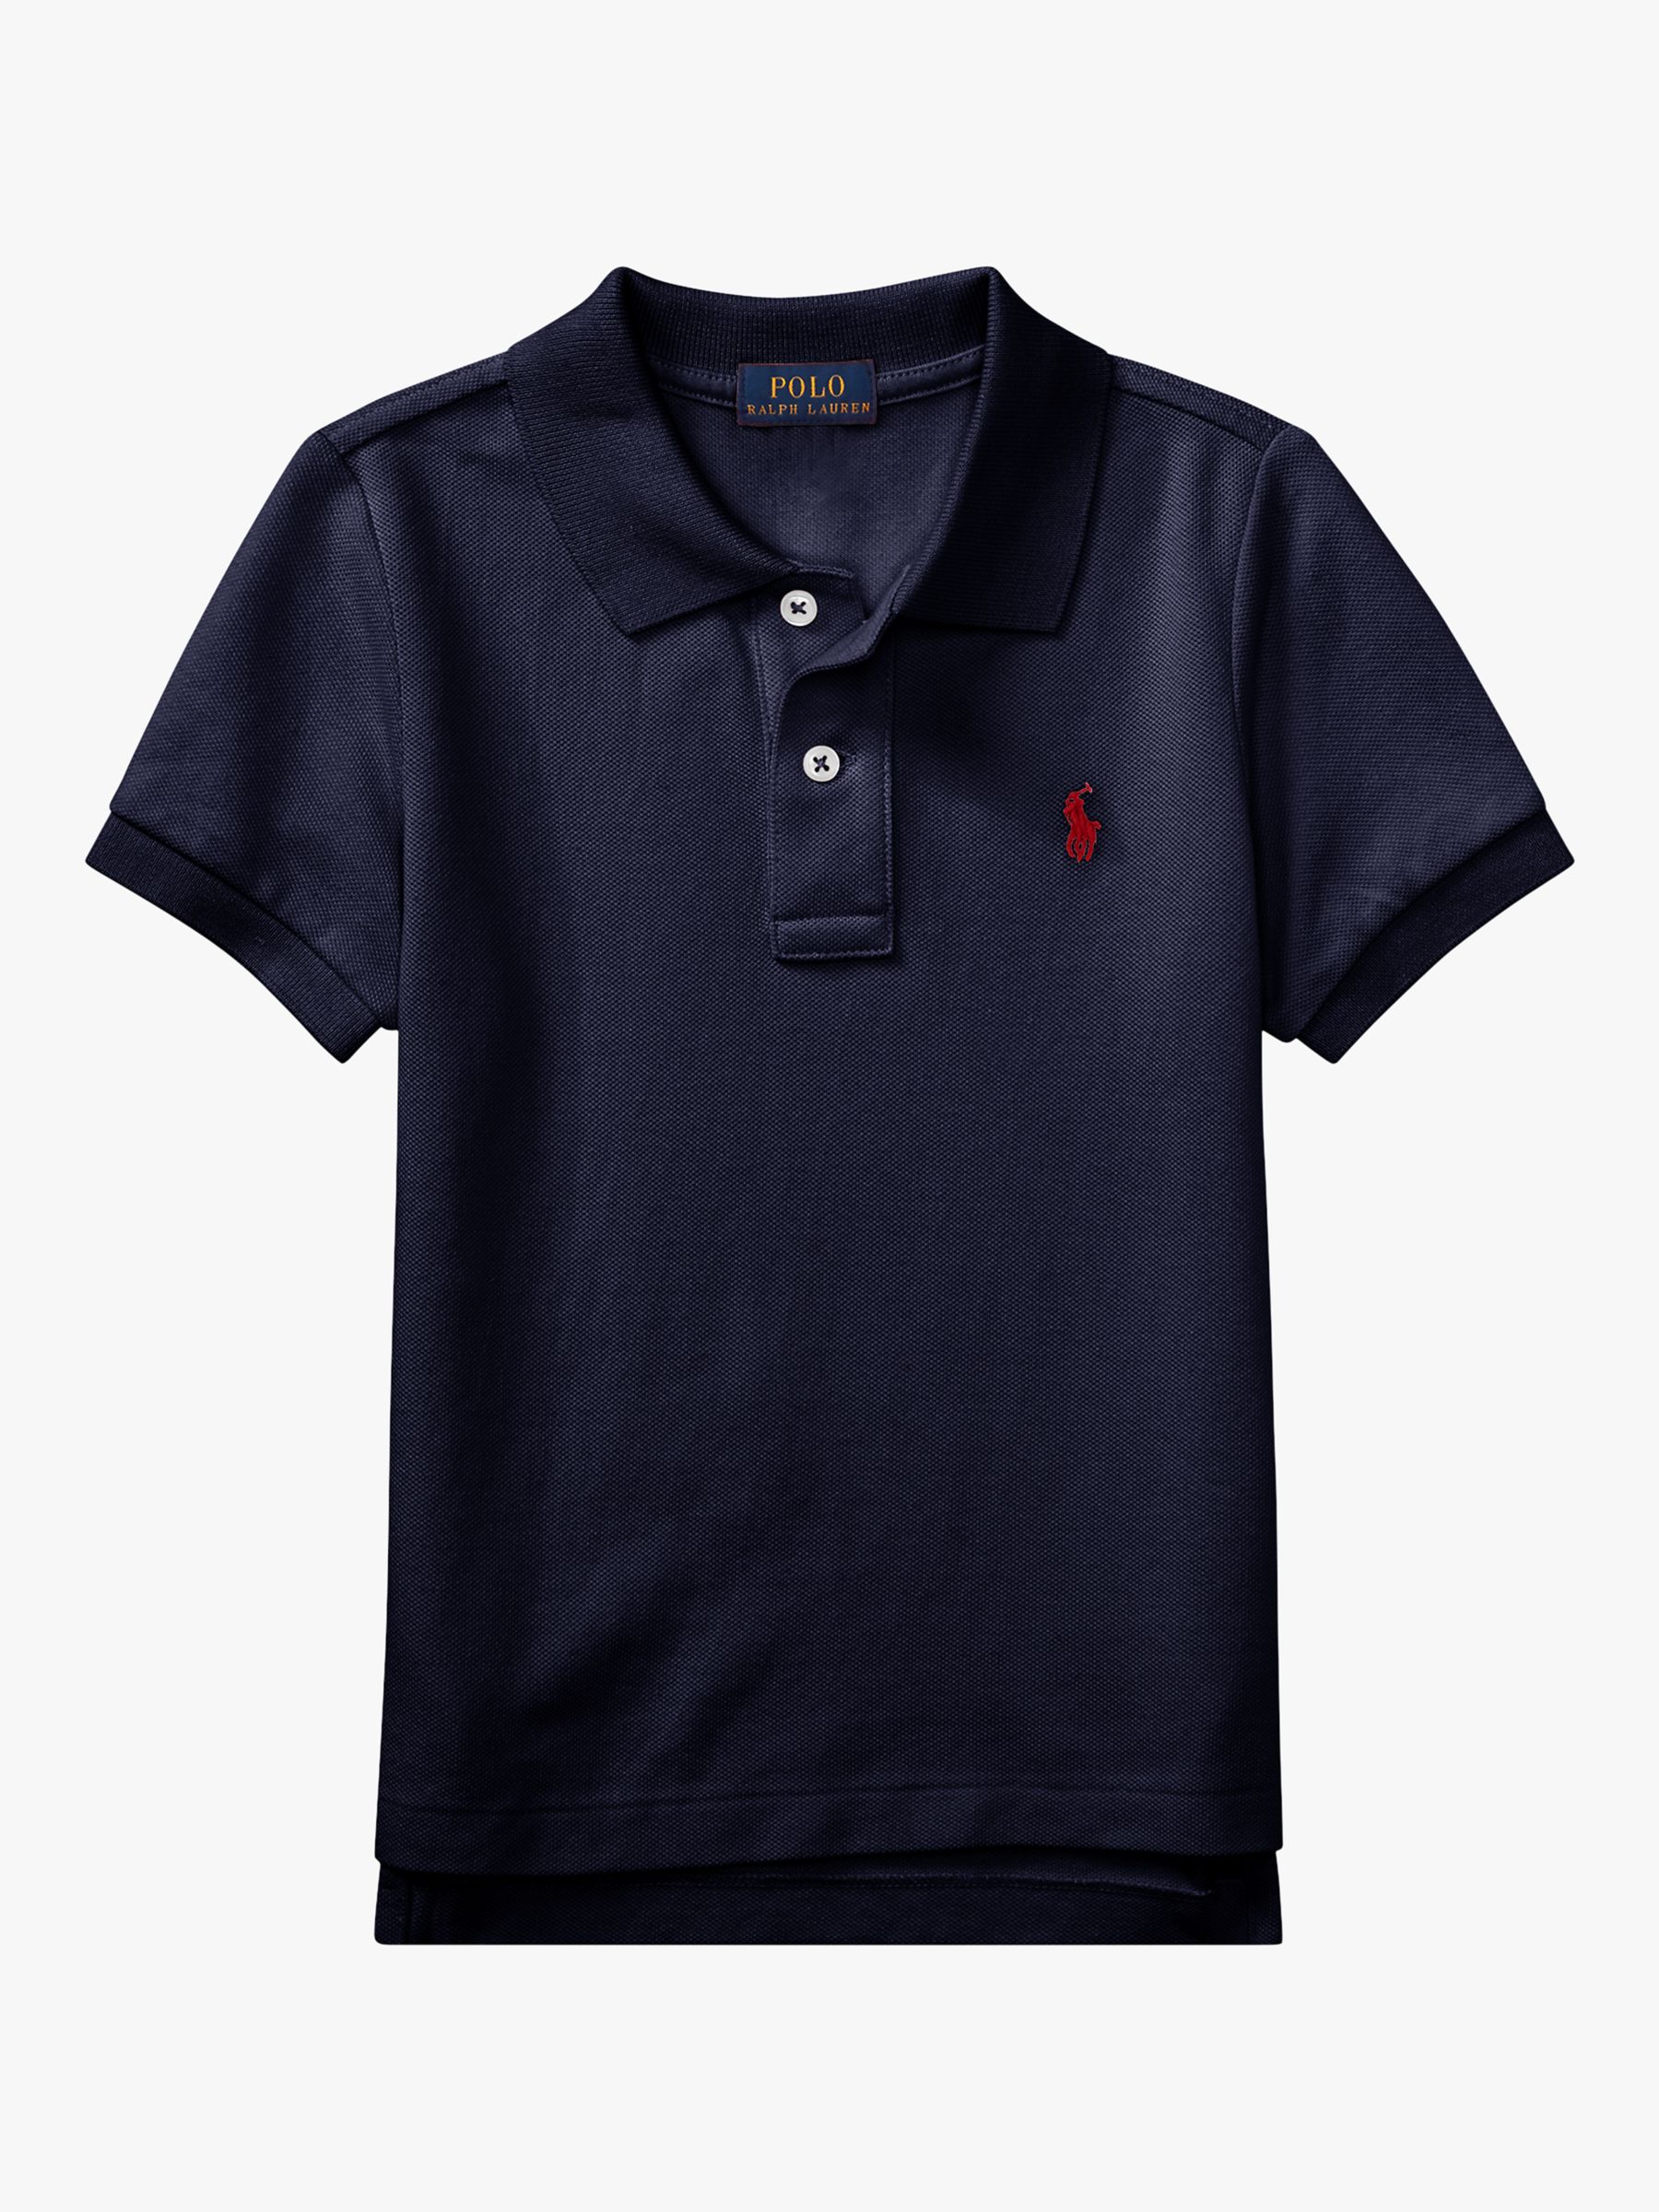 Image of Polo Ralph Lauren Boys Polo Shirt